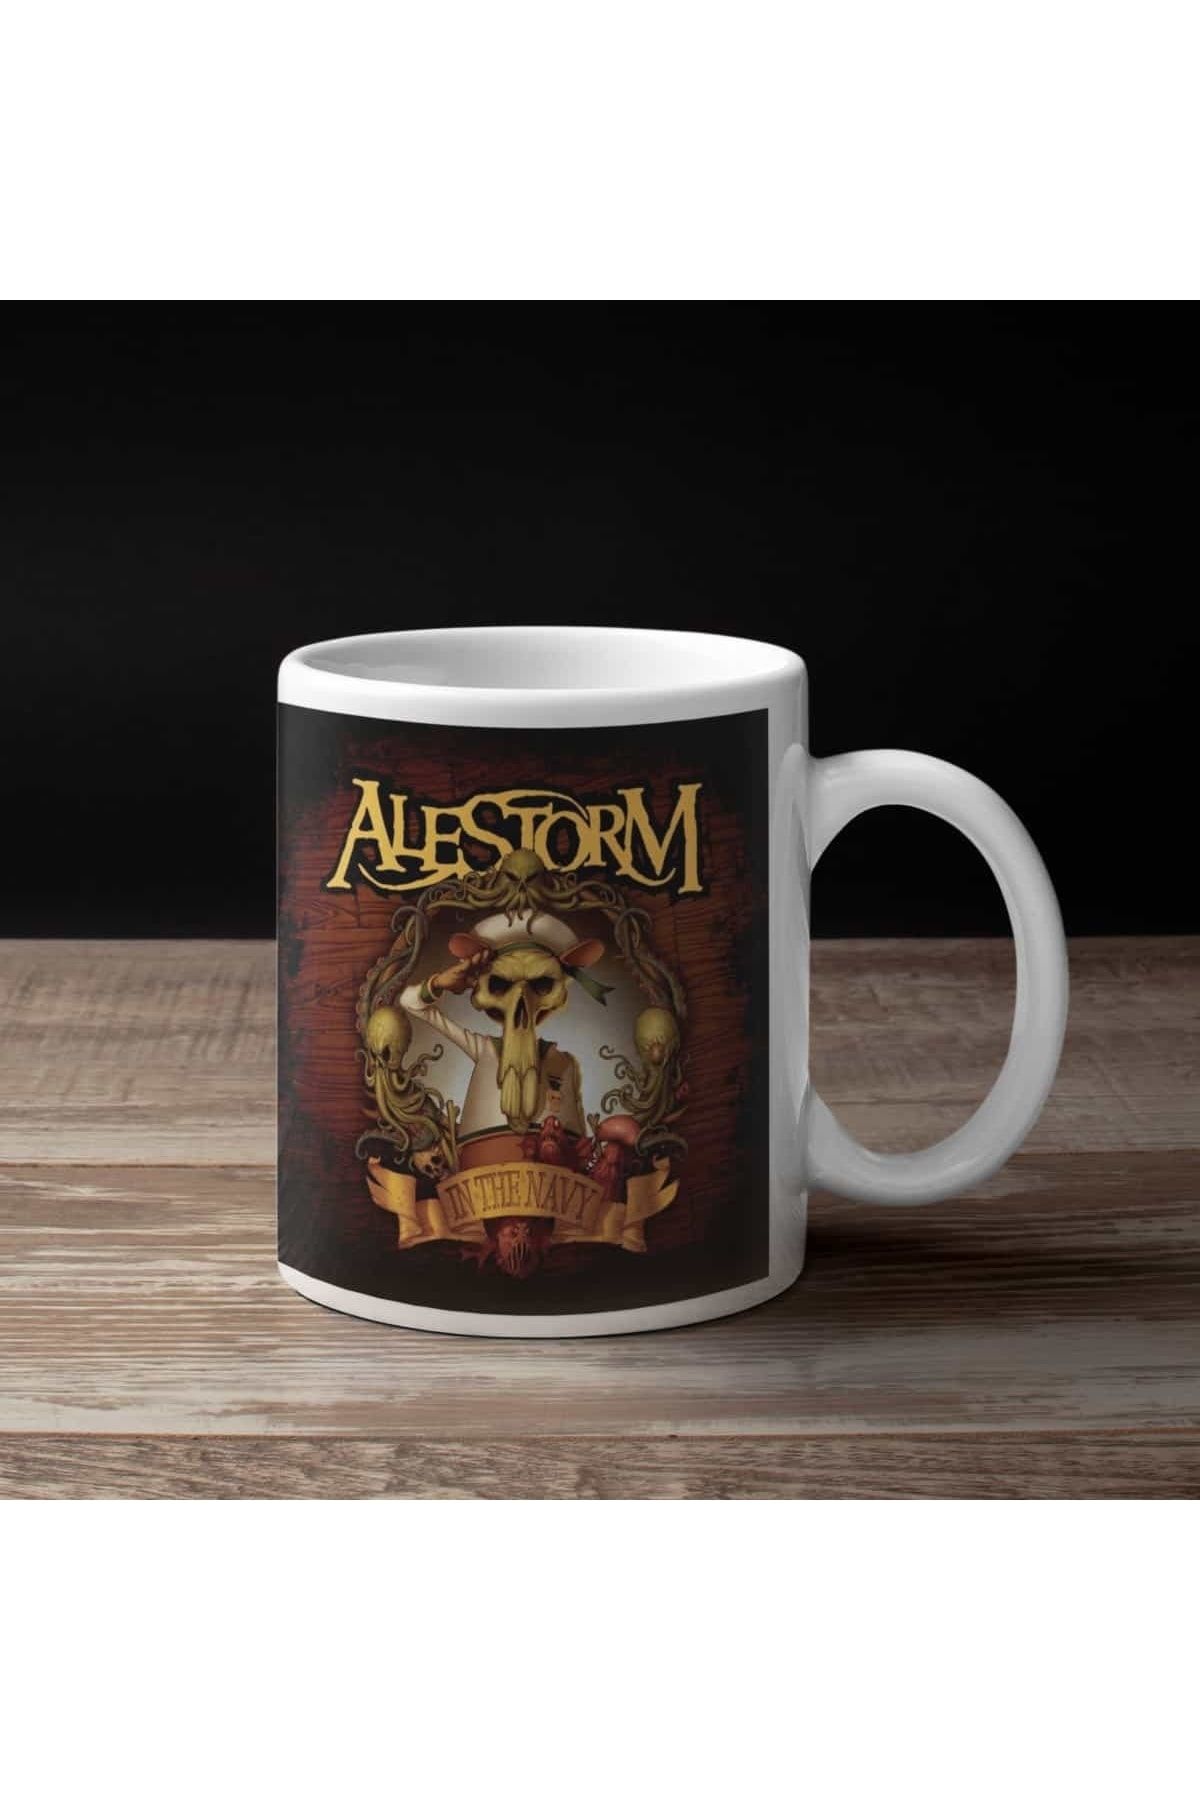 Mugs Heaven Alestorm Kahve Kupası, Alestorm In The Navy Baskılı Kupa